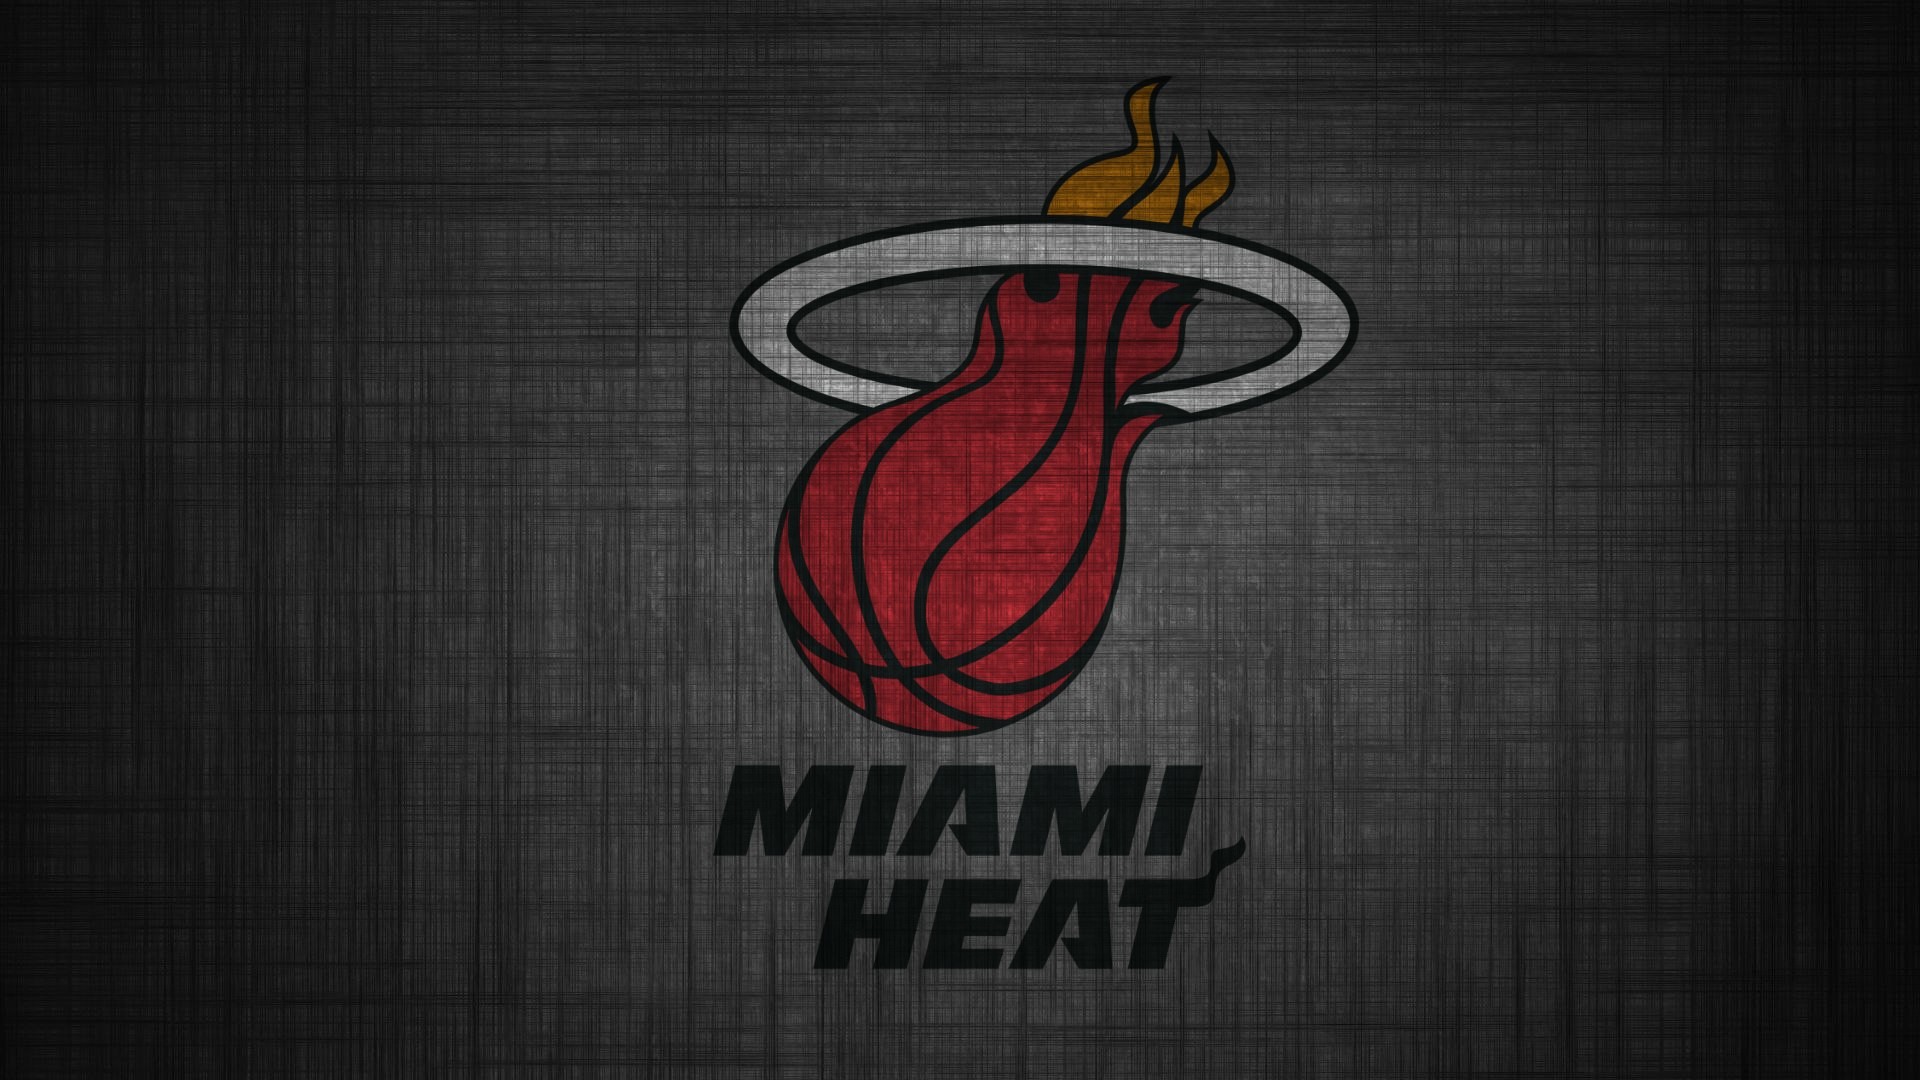 Miami Heat Background Image